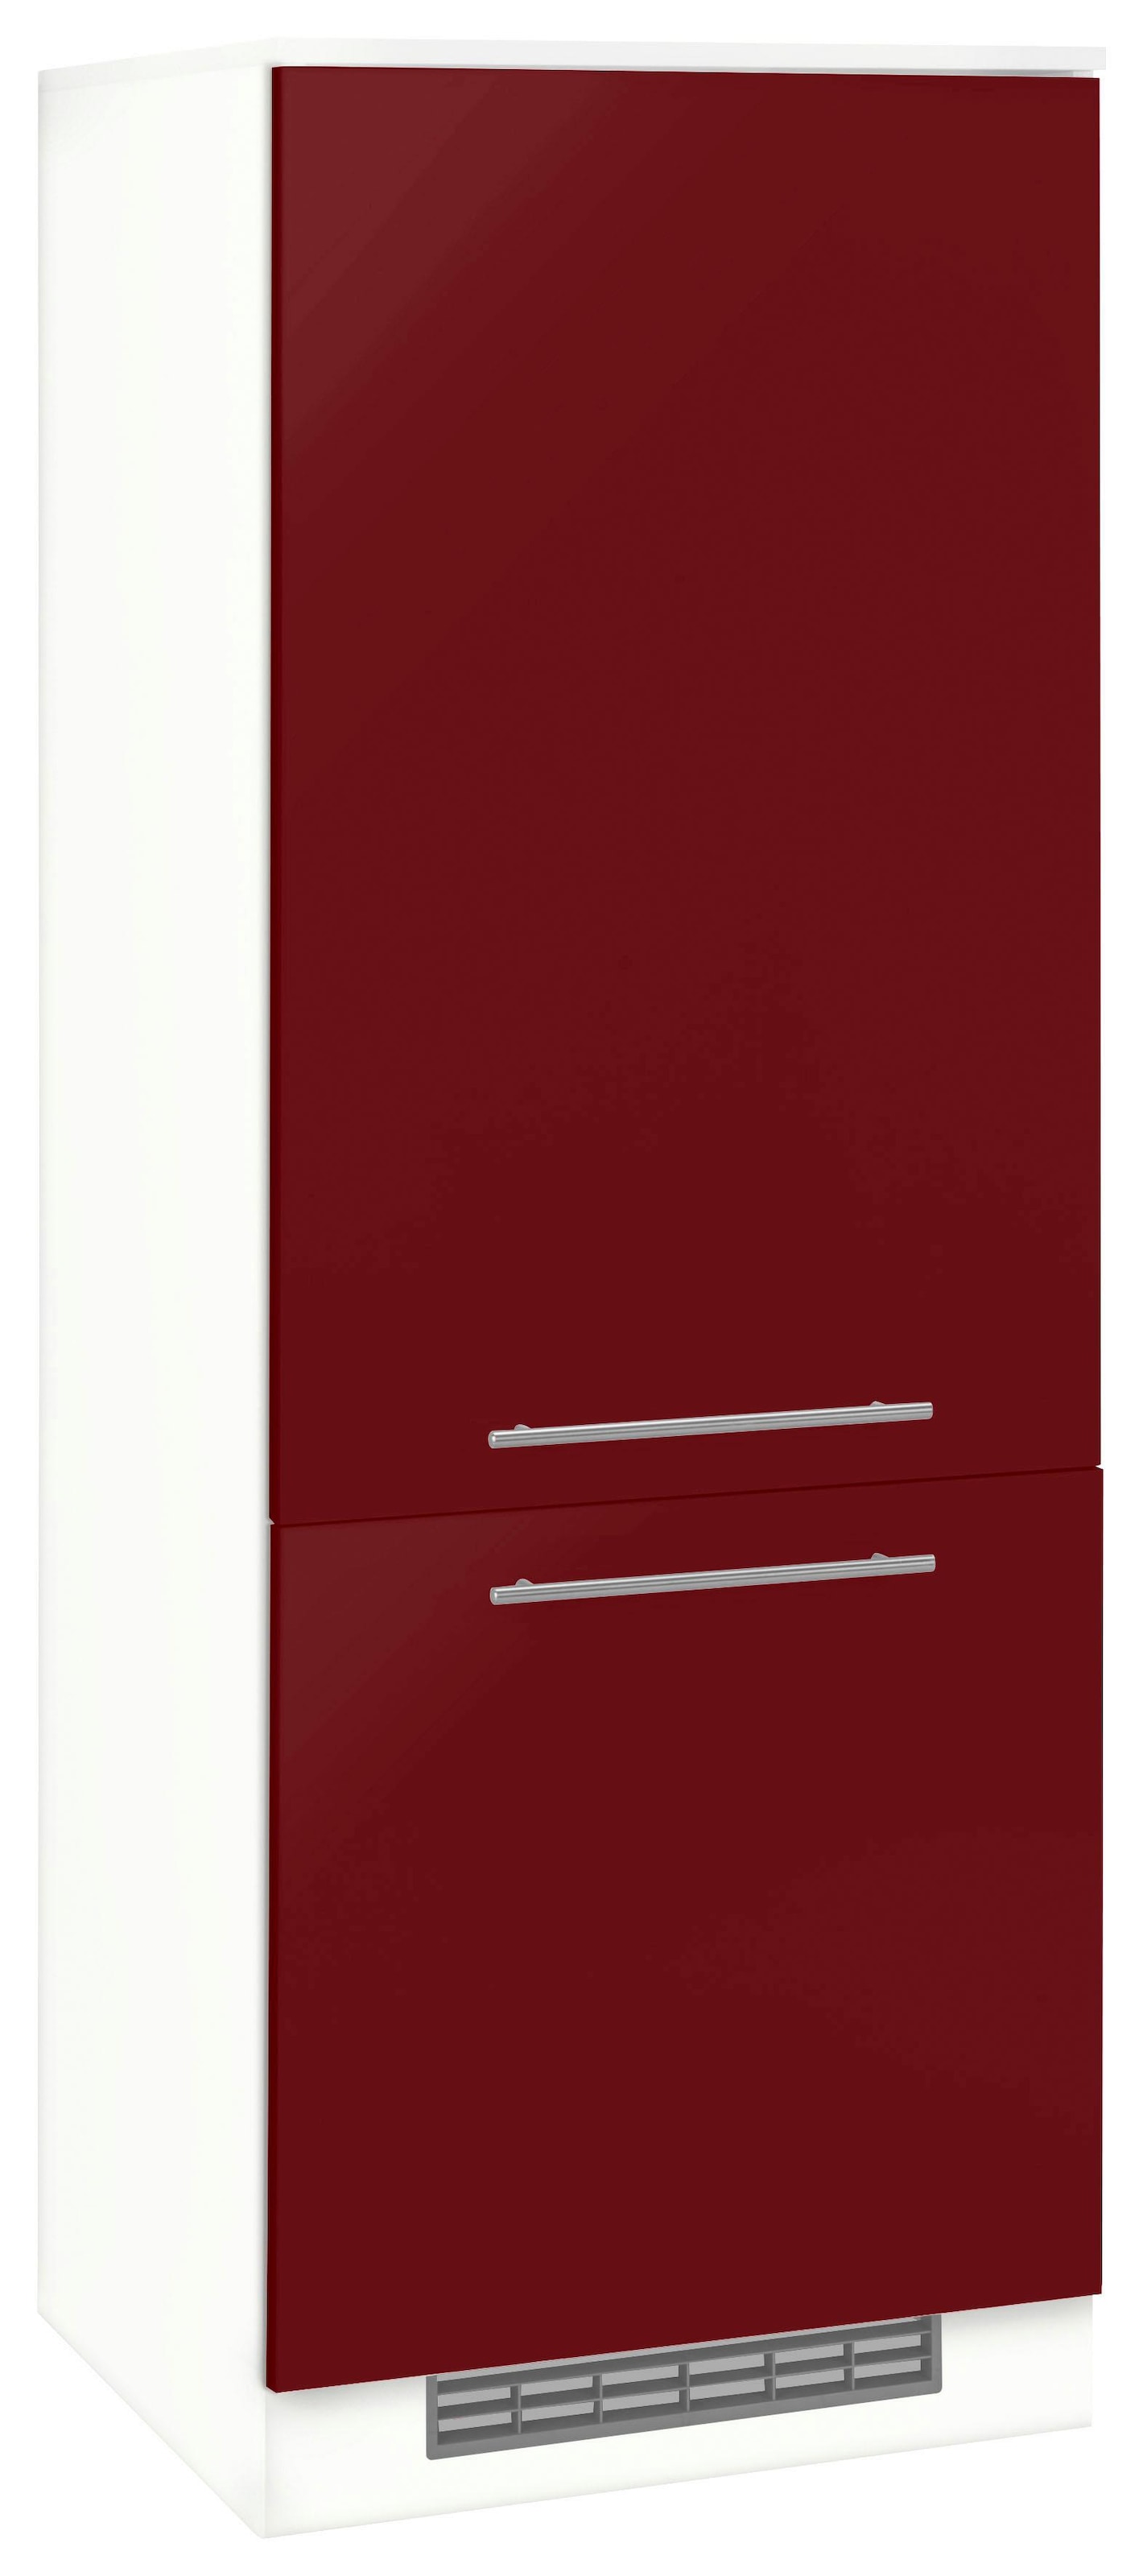 Elektronikgeschäft wiho Küchen Kühlumbauschrank »Flexi2« kaufen online